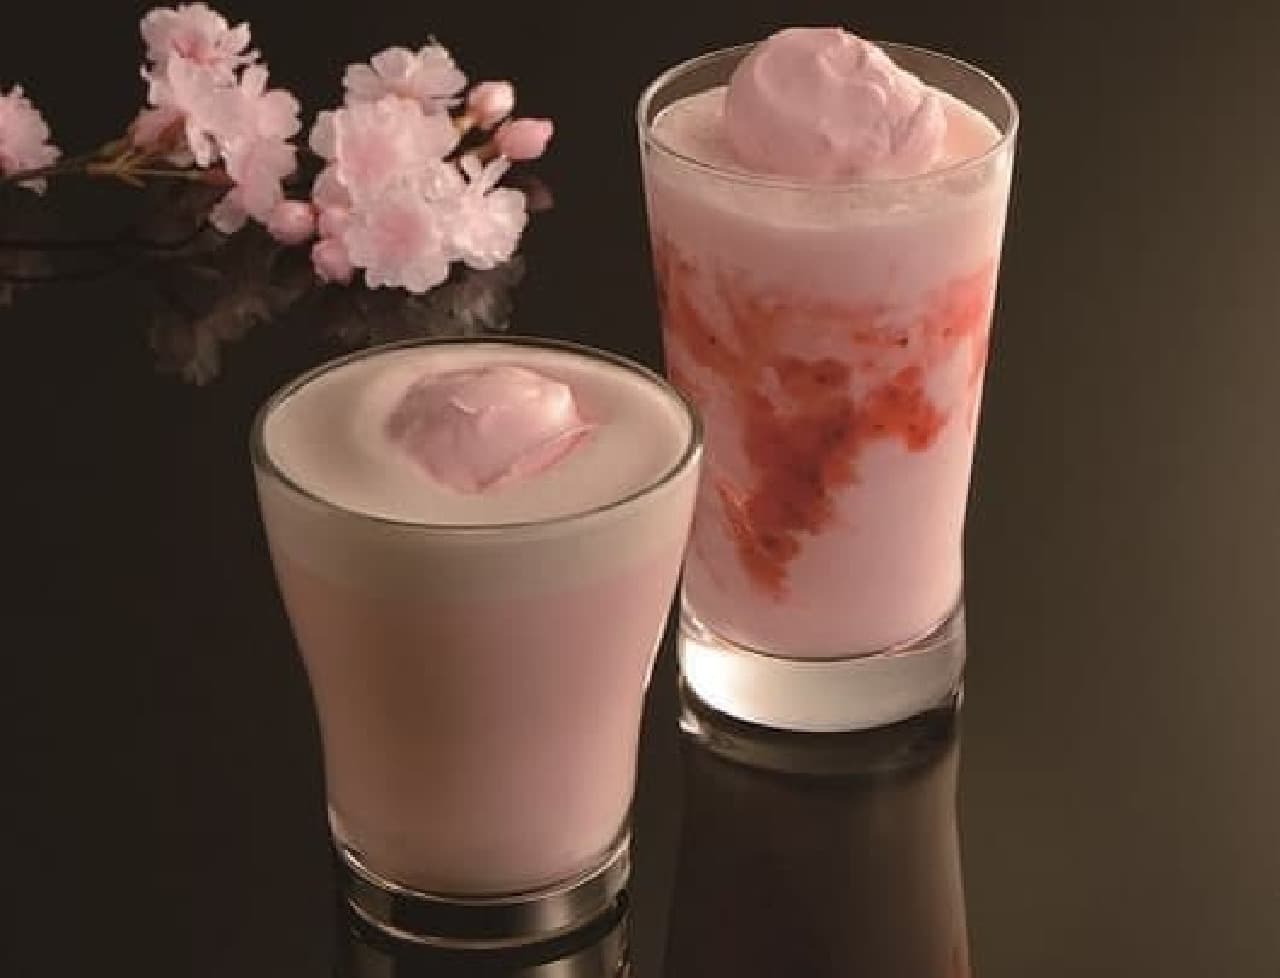 Sakura latte (left) and sol beige Sakura & berry (right)